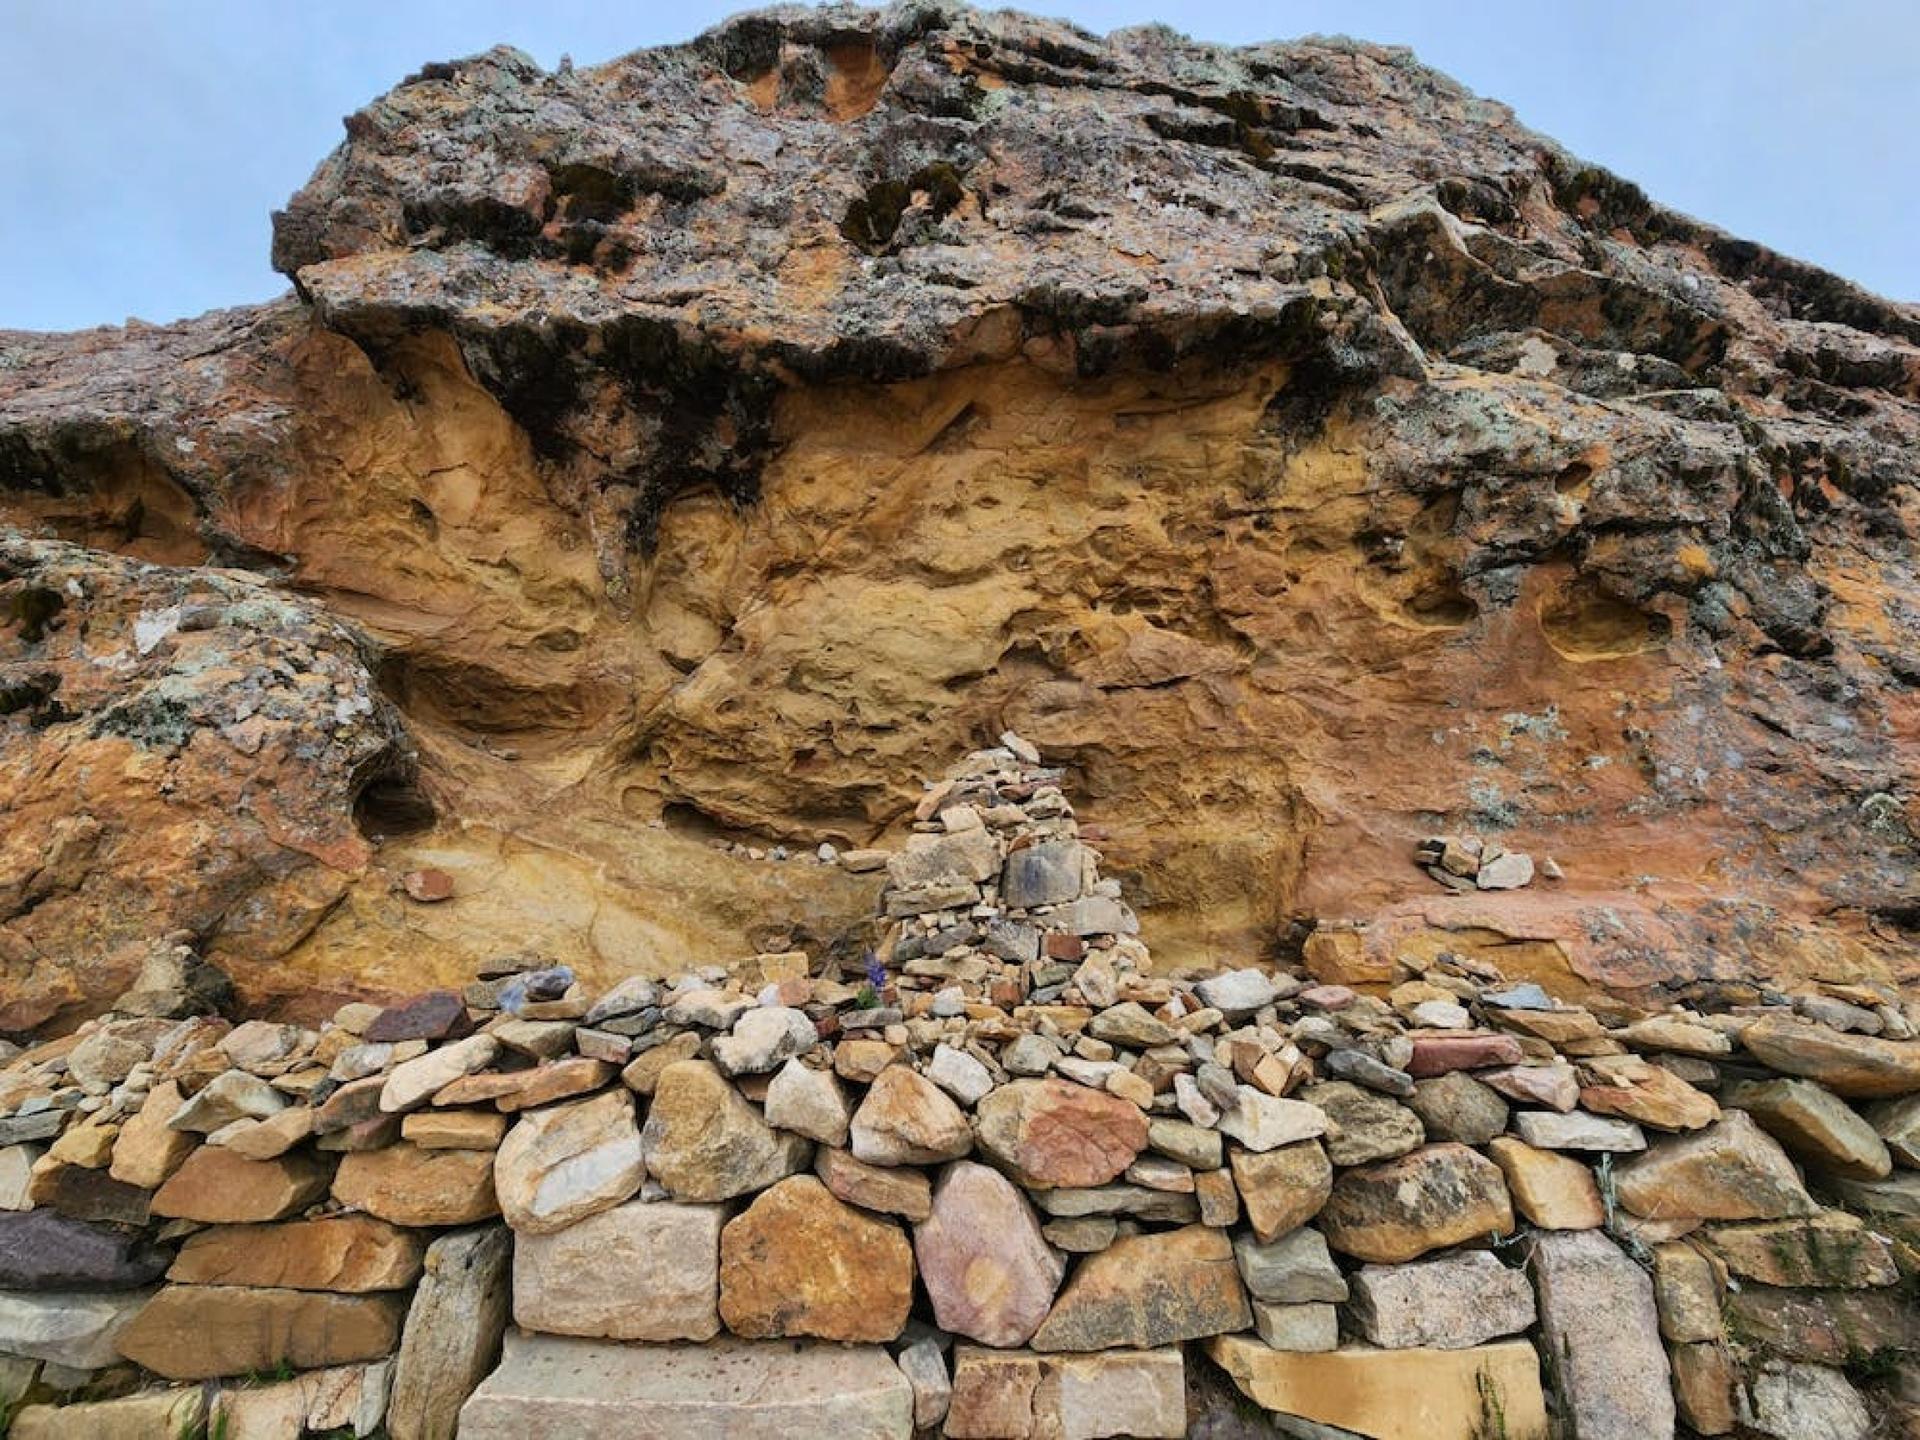 Sacred rocks piled up in Bolivia